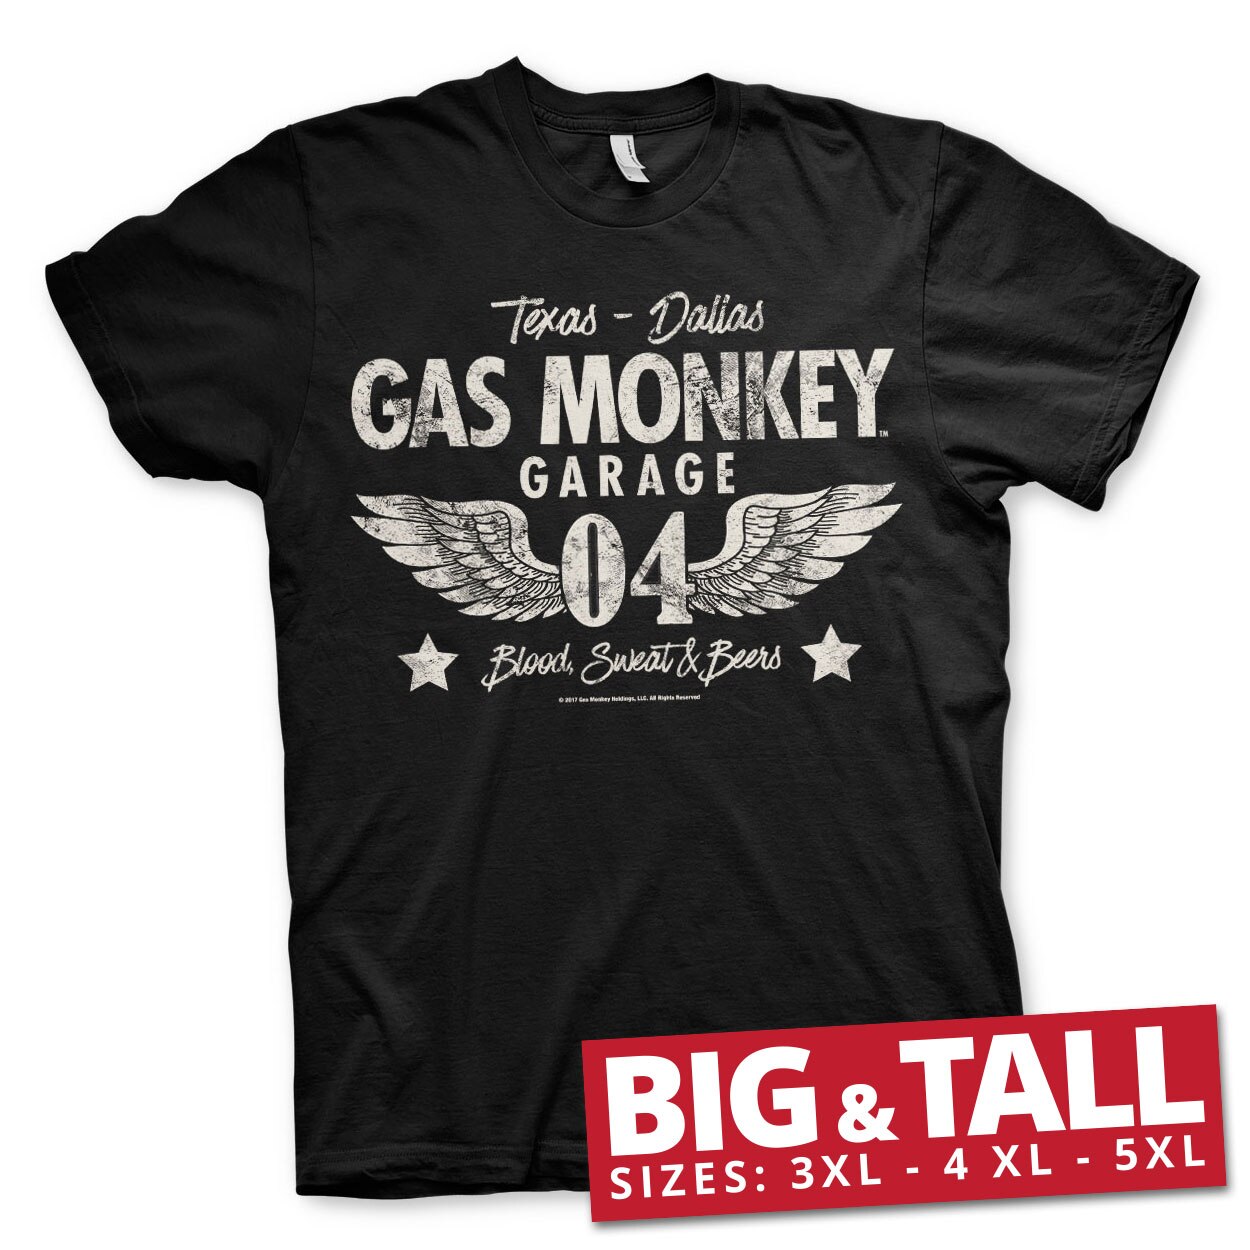 Gas Monkey Garage 04-WINGS Big & Tall Tee